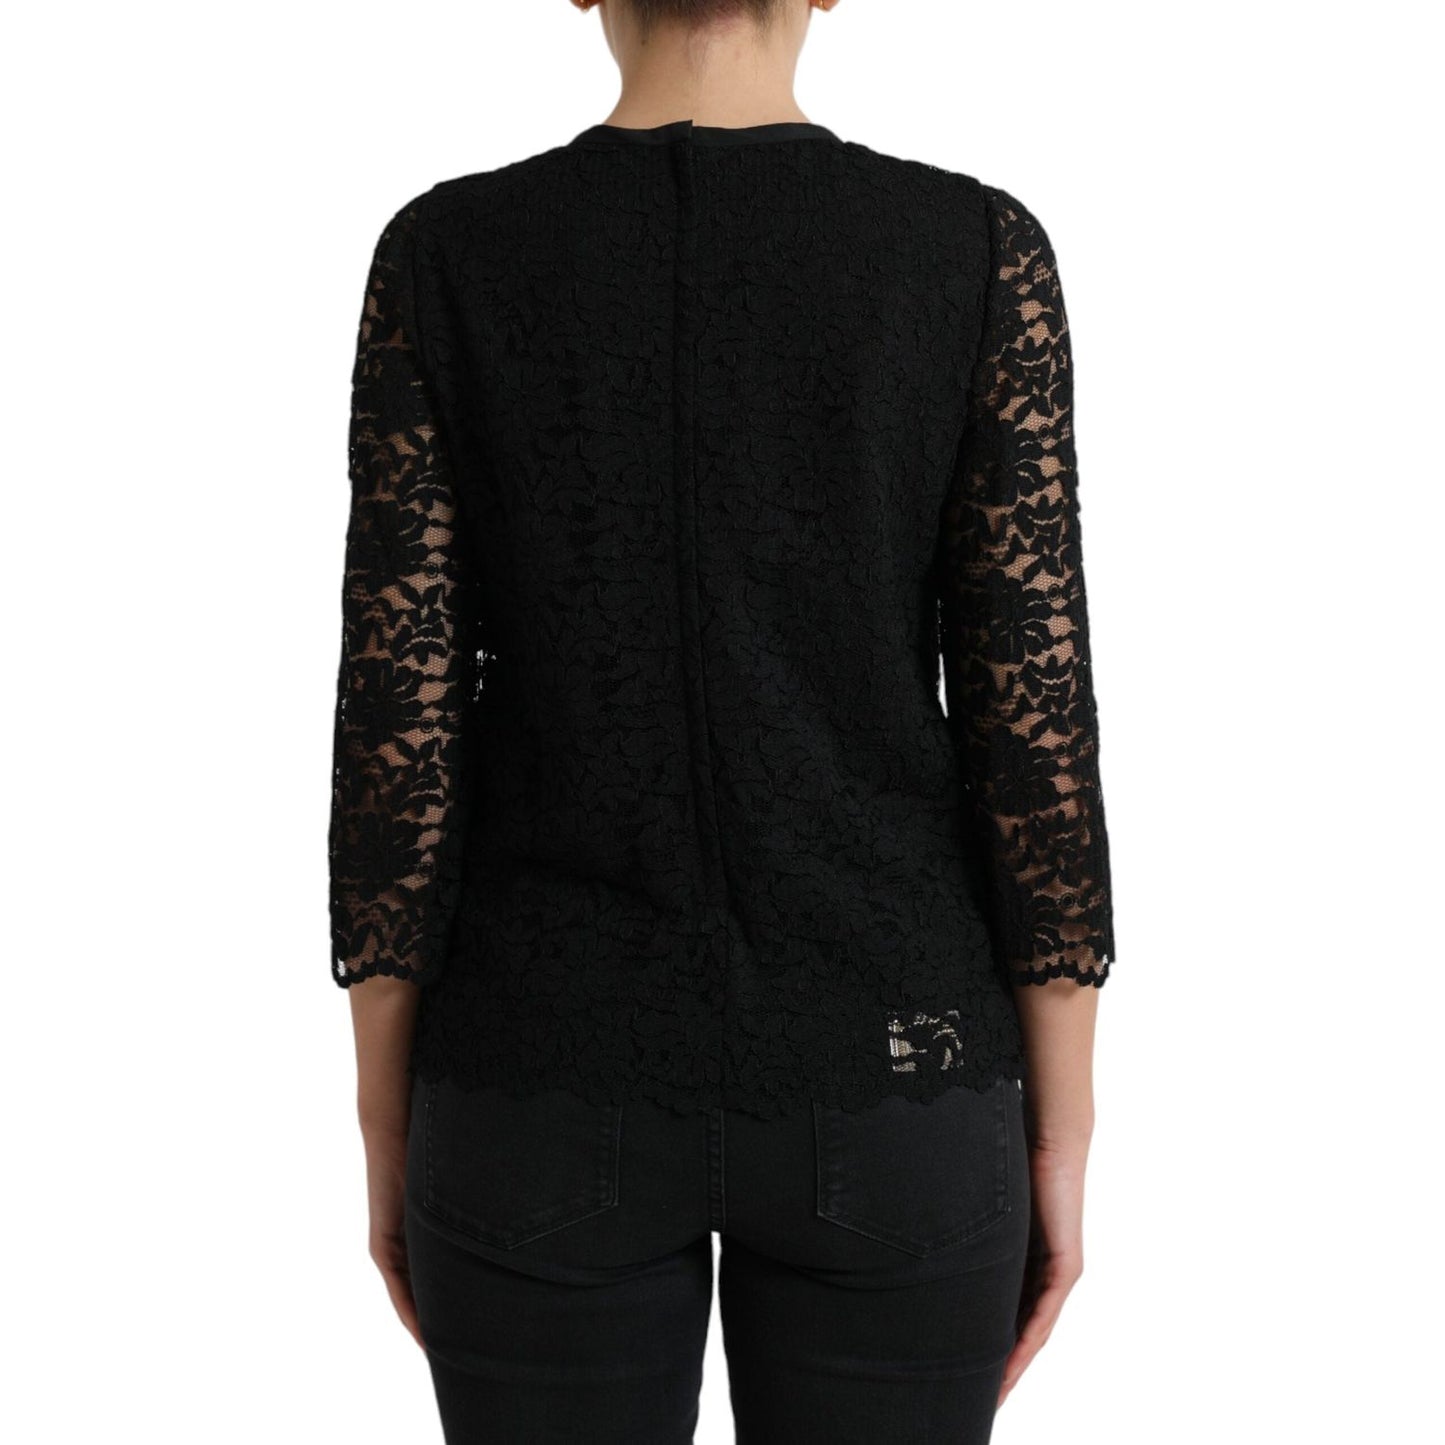 Dolce & Gabbana Elegant Floral Lace Long Sleeve Top black-staff-blouse-floral-lace-nylon-top